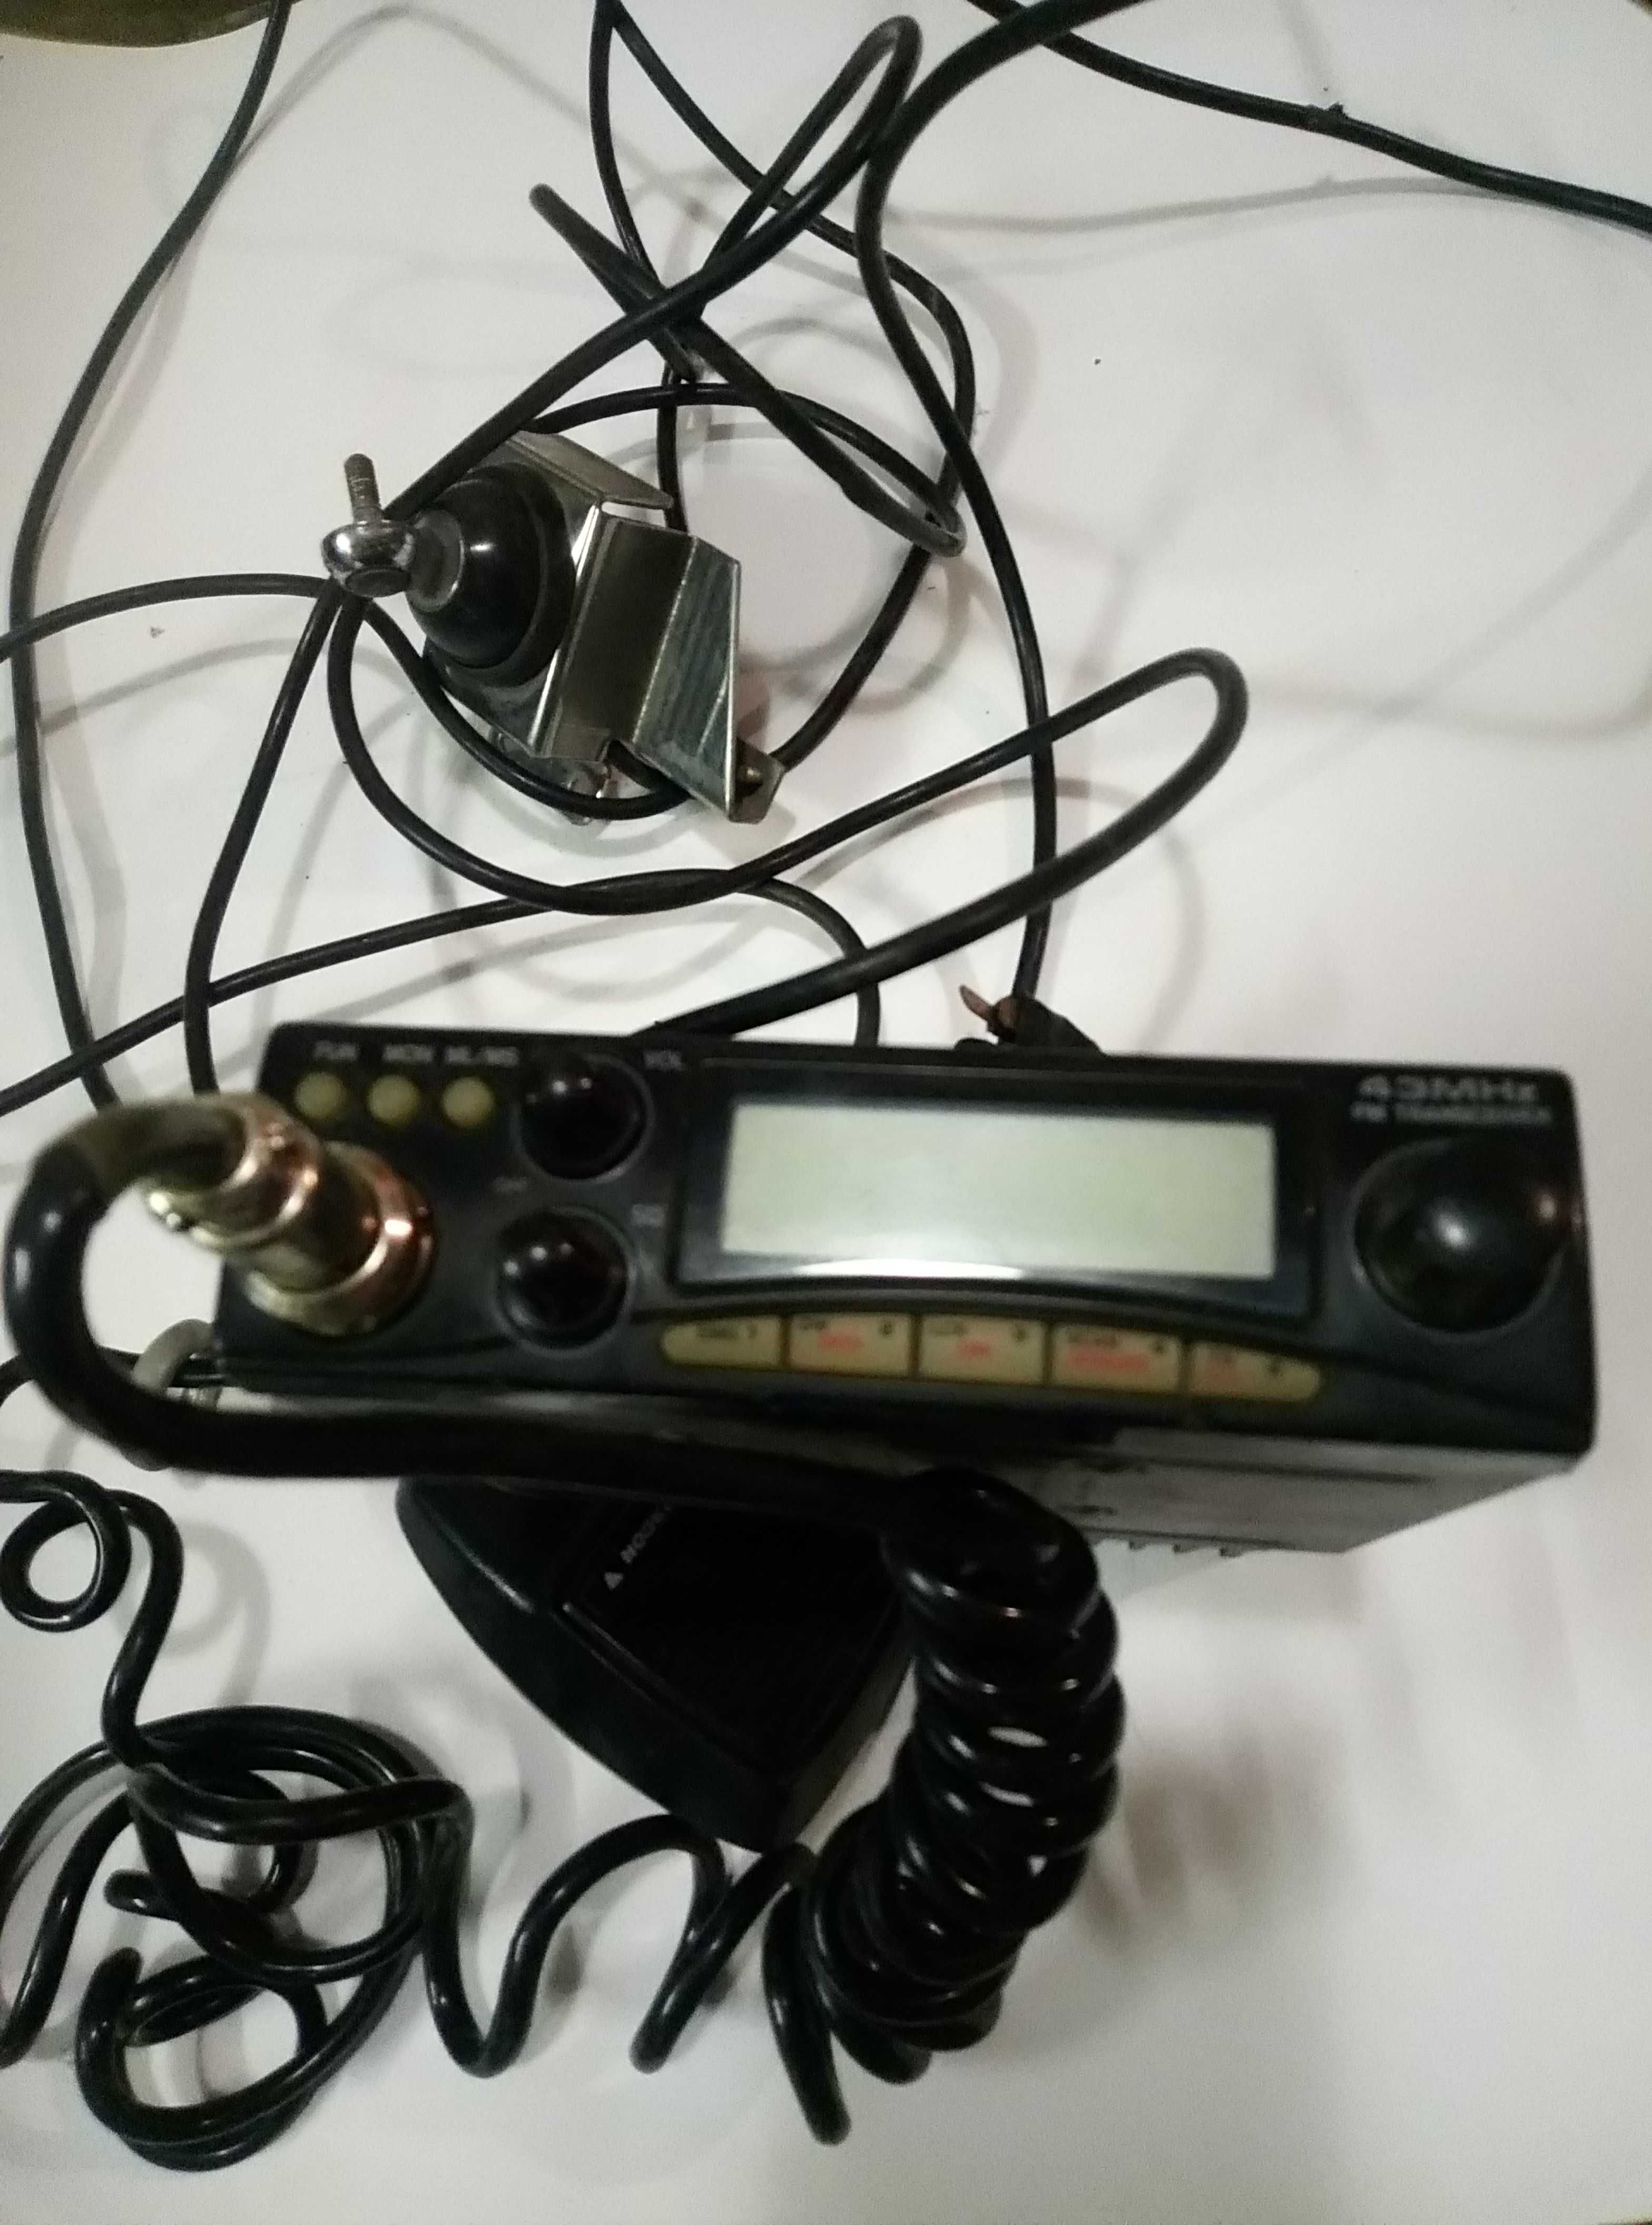 Радиостанция Dragon sy-5430